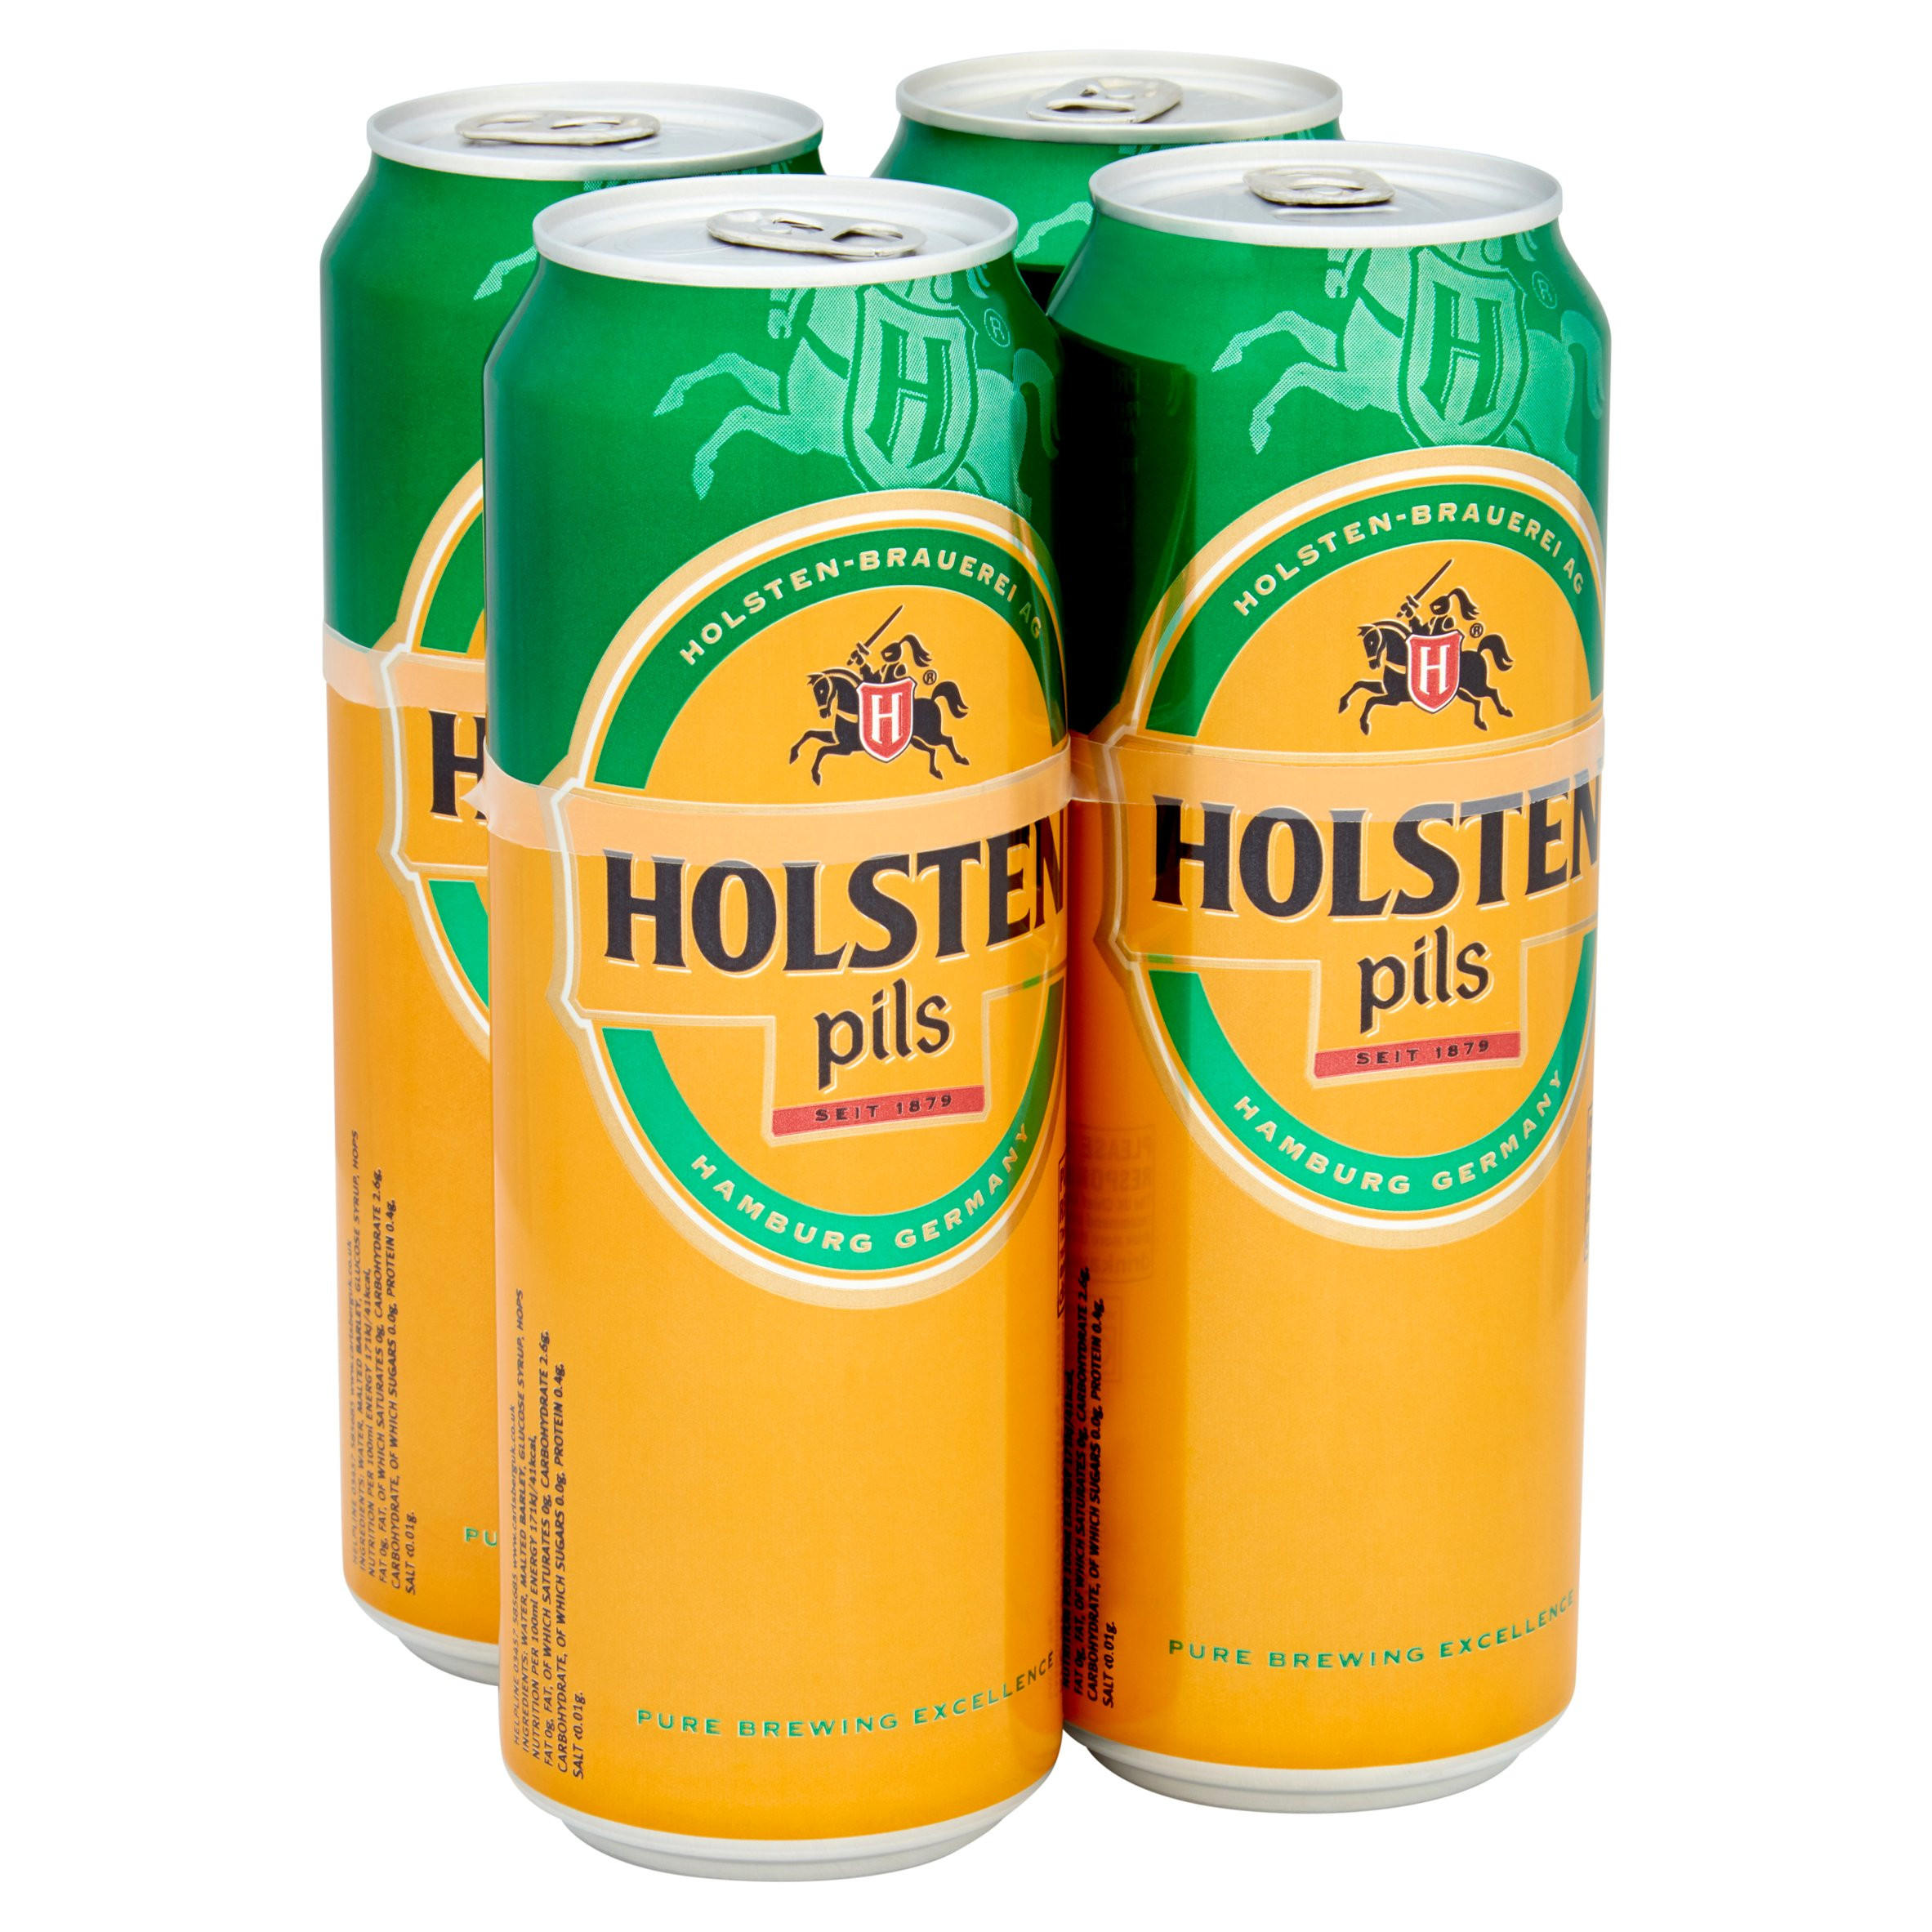 holsten-pils-lager-beer-4-x-568ml-pint-cans-beer-iceland-foods